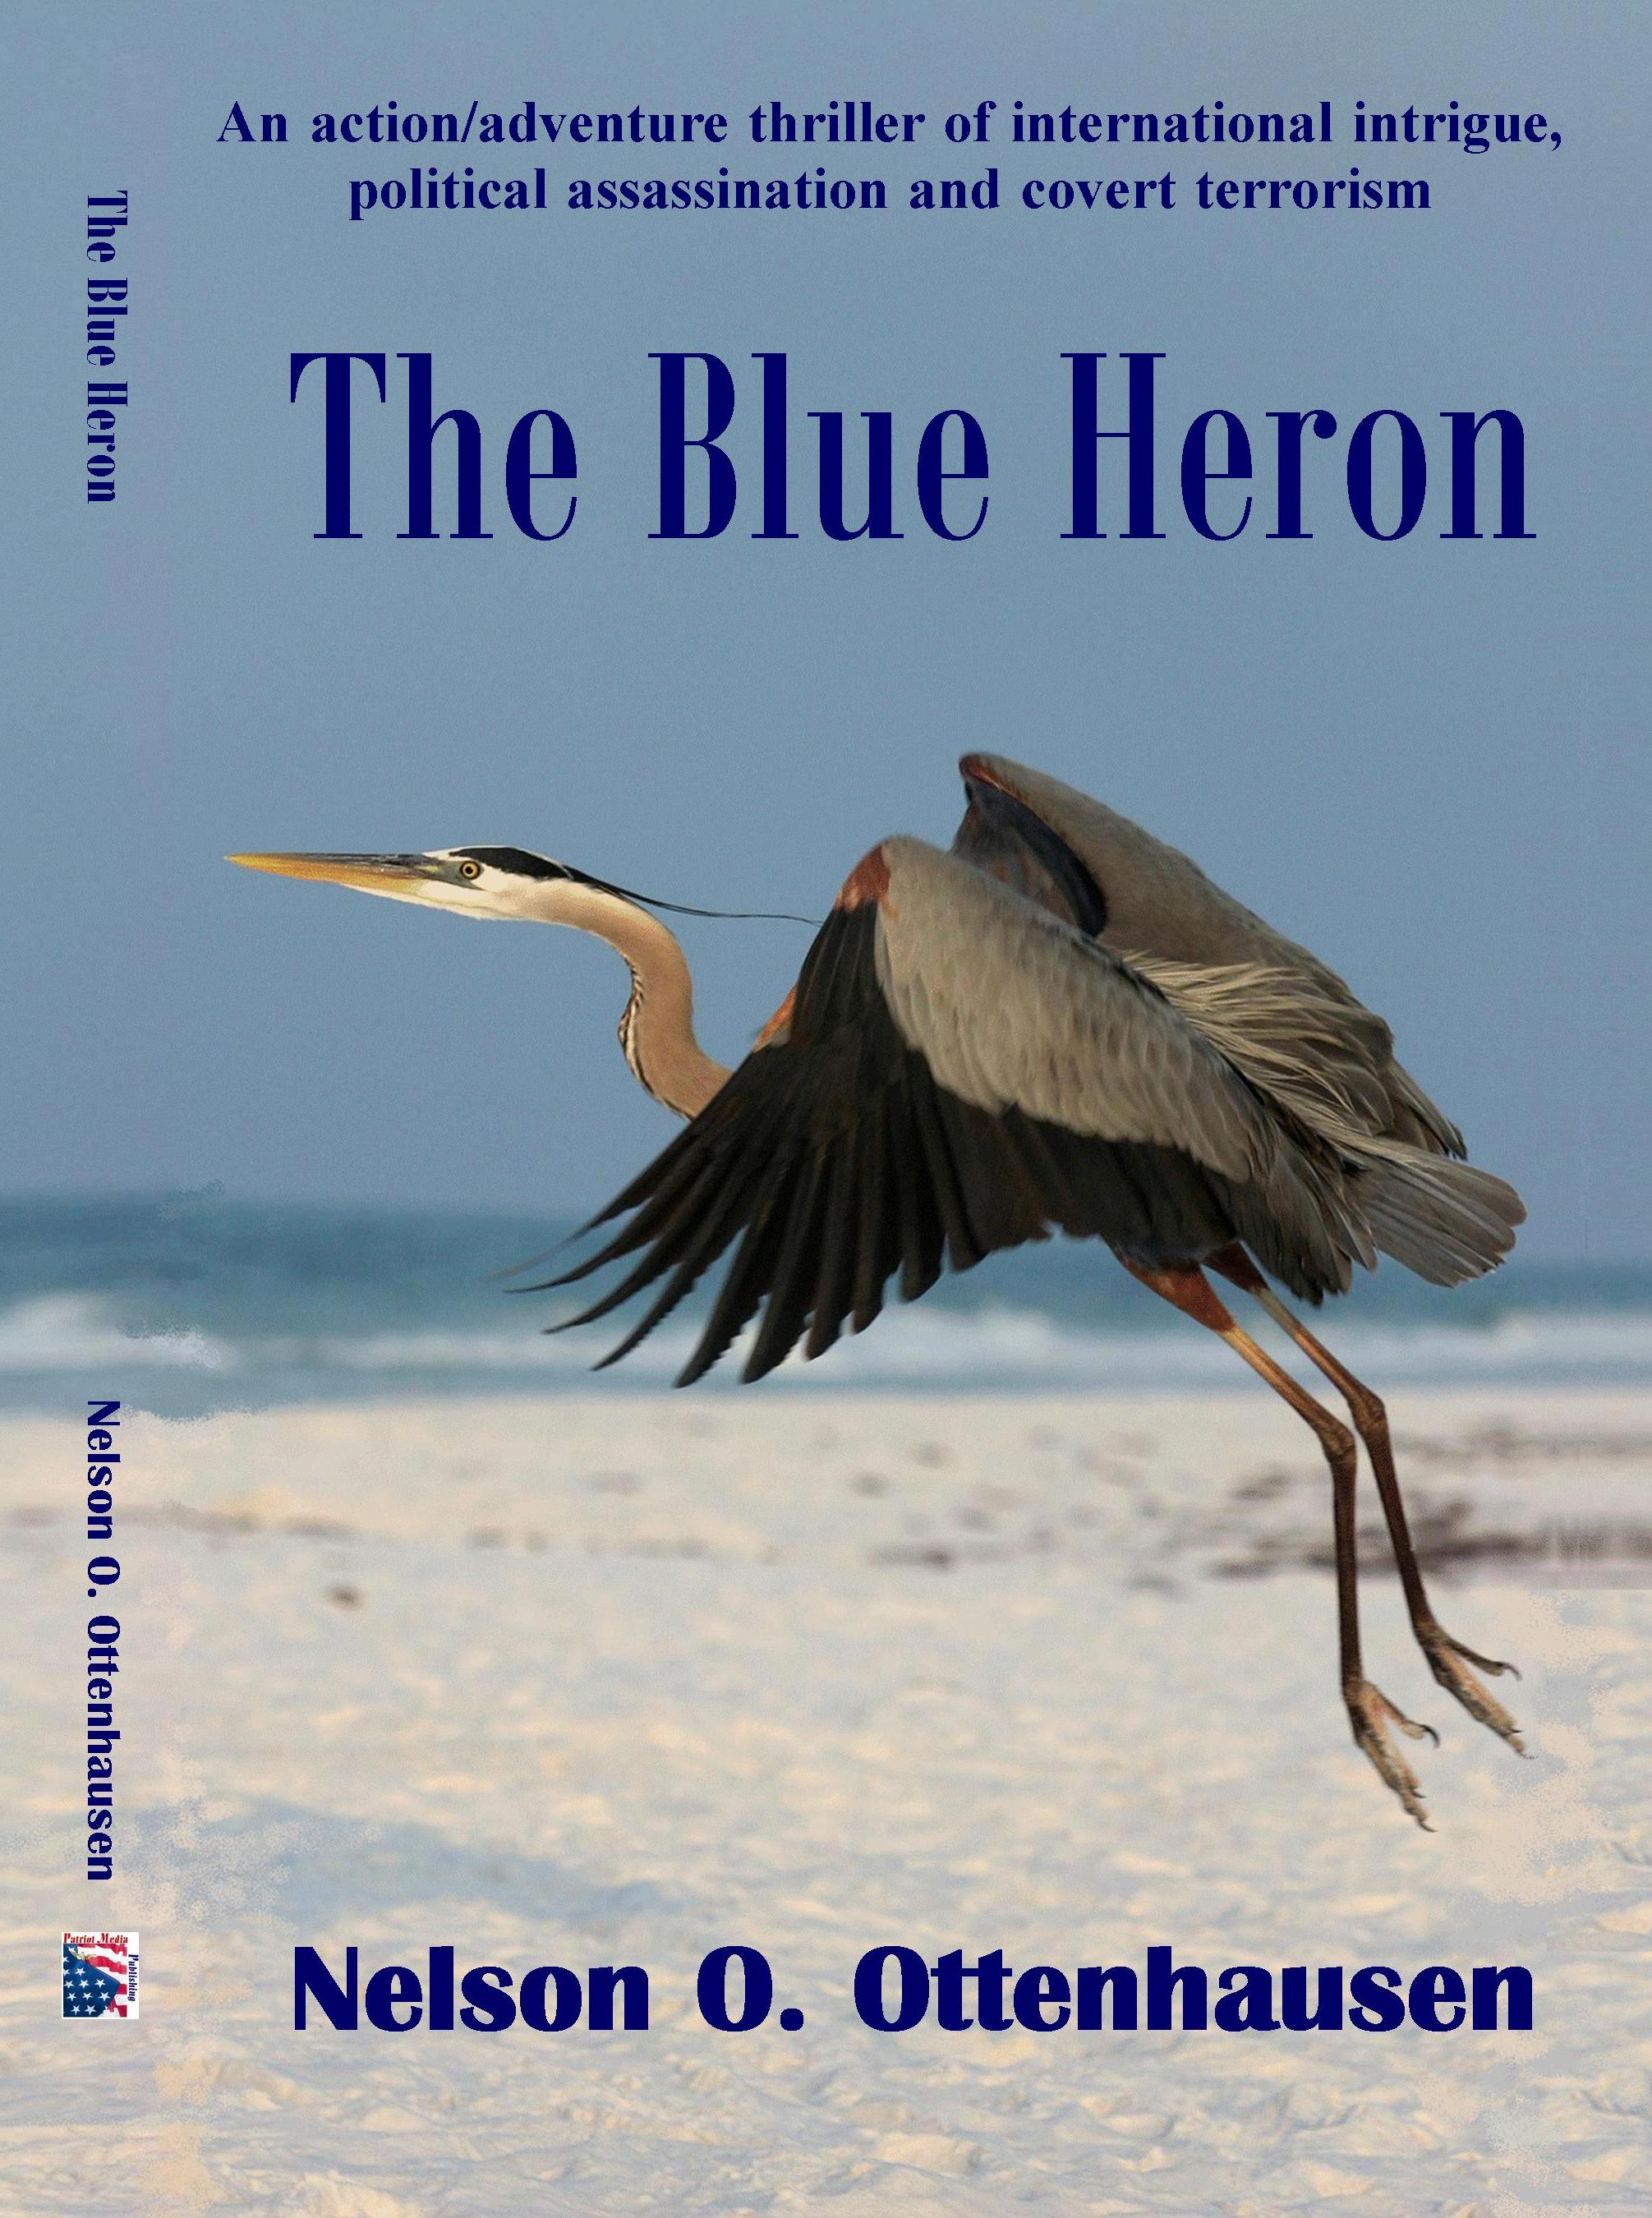 The Blue Heron by Nelson Ottenhausen